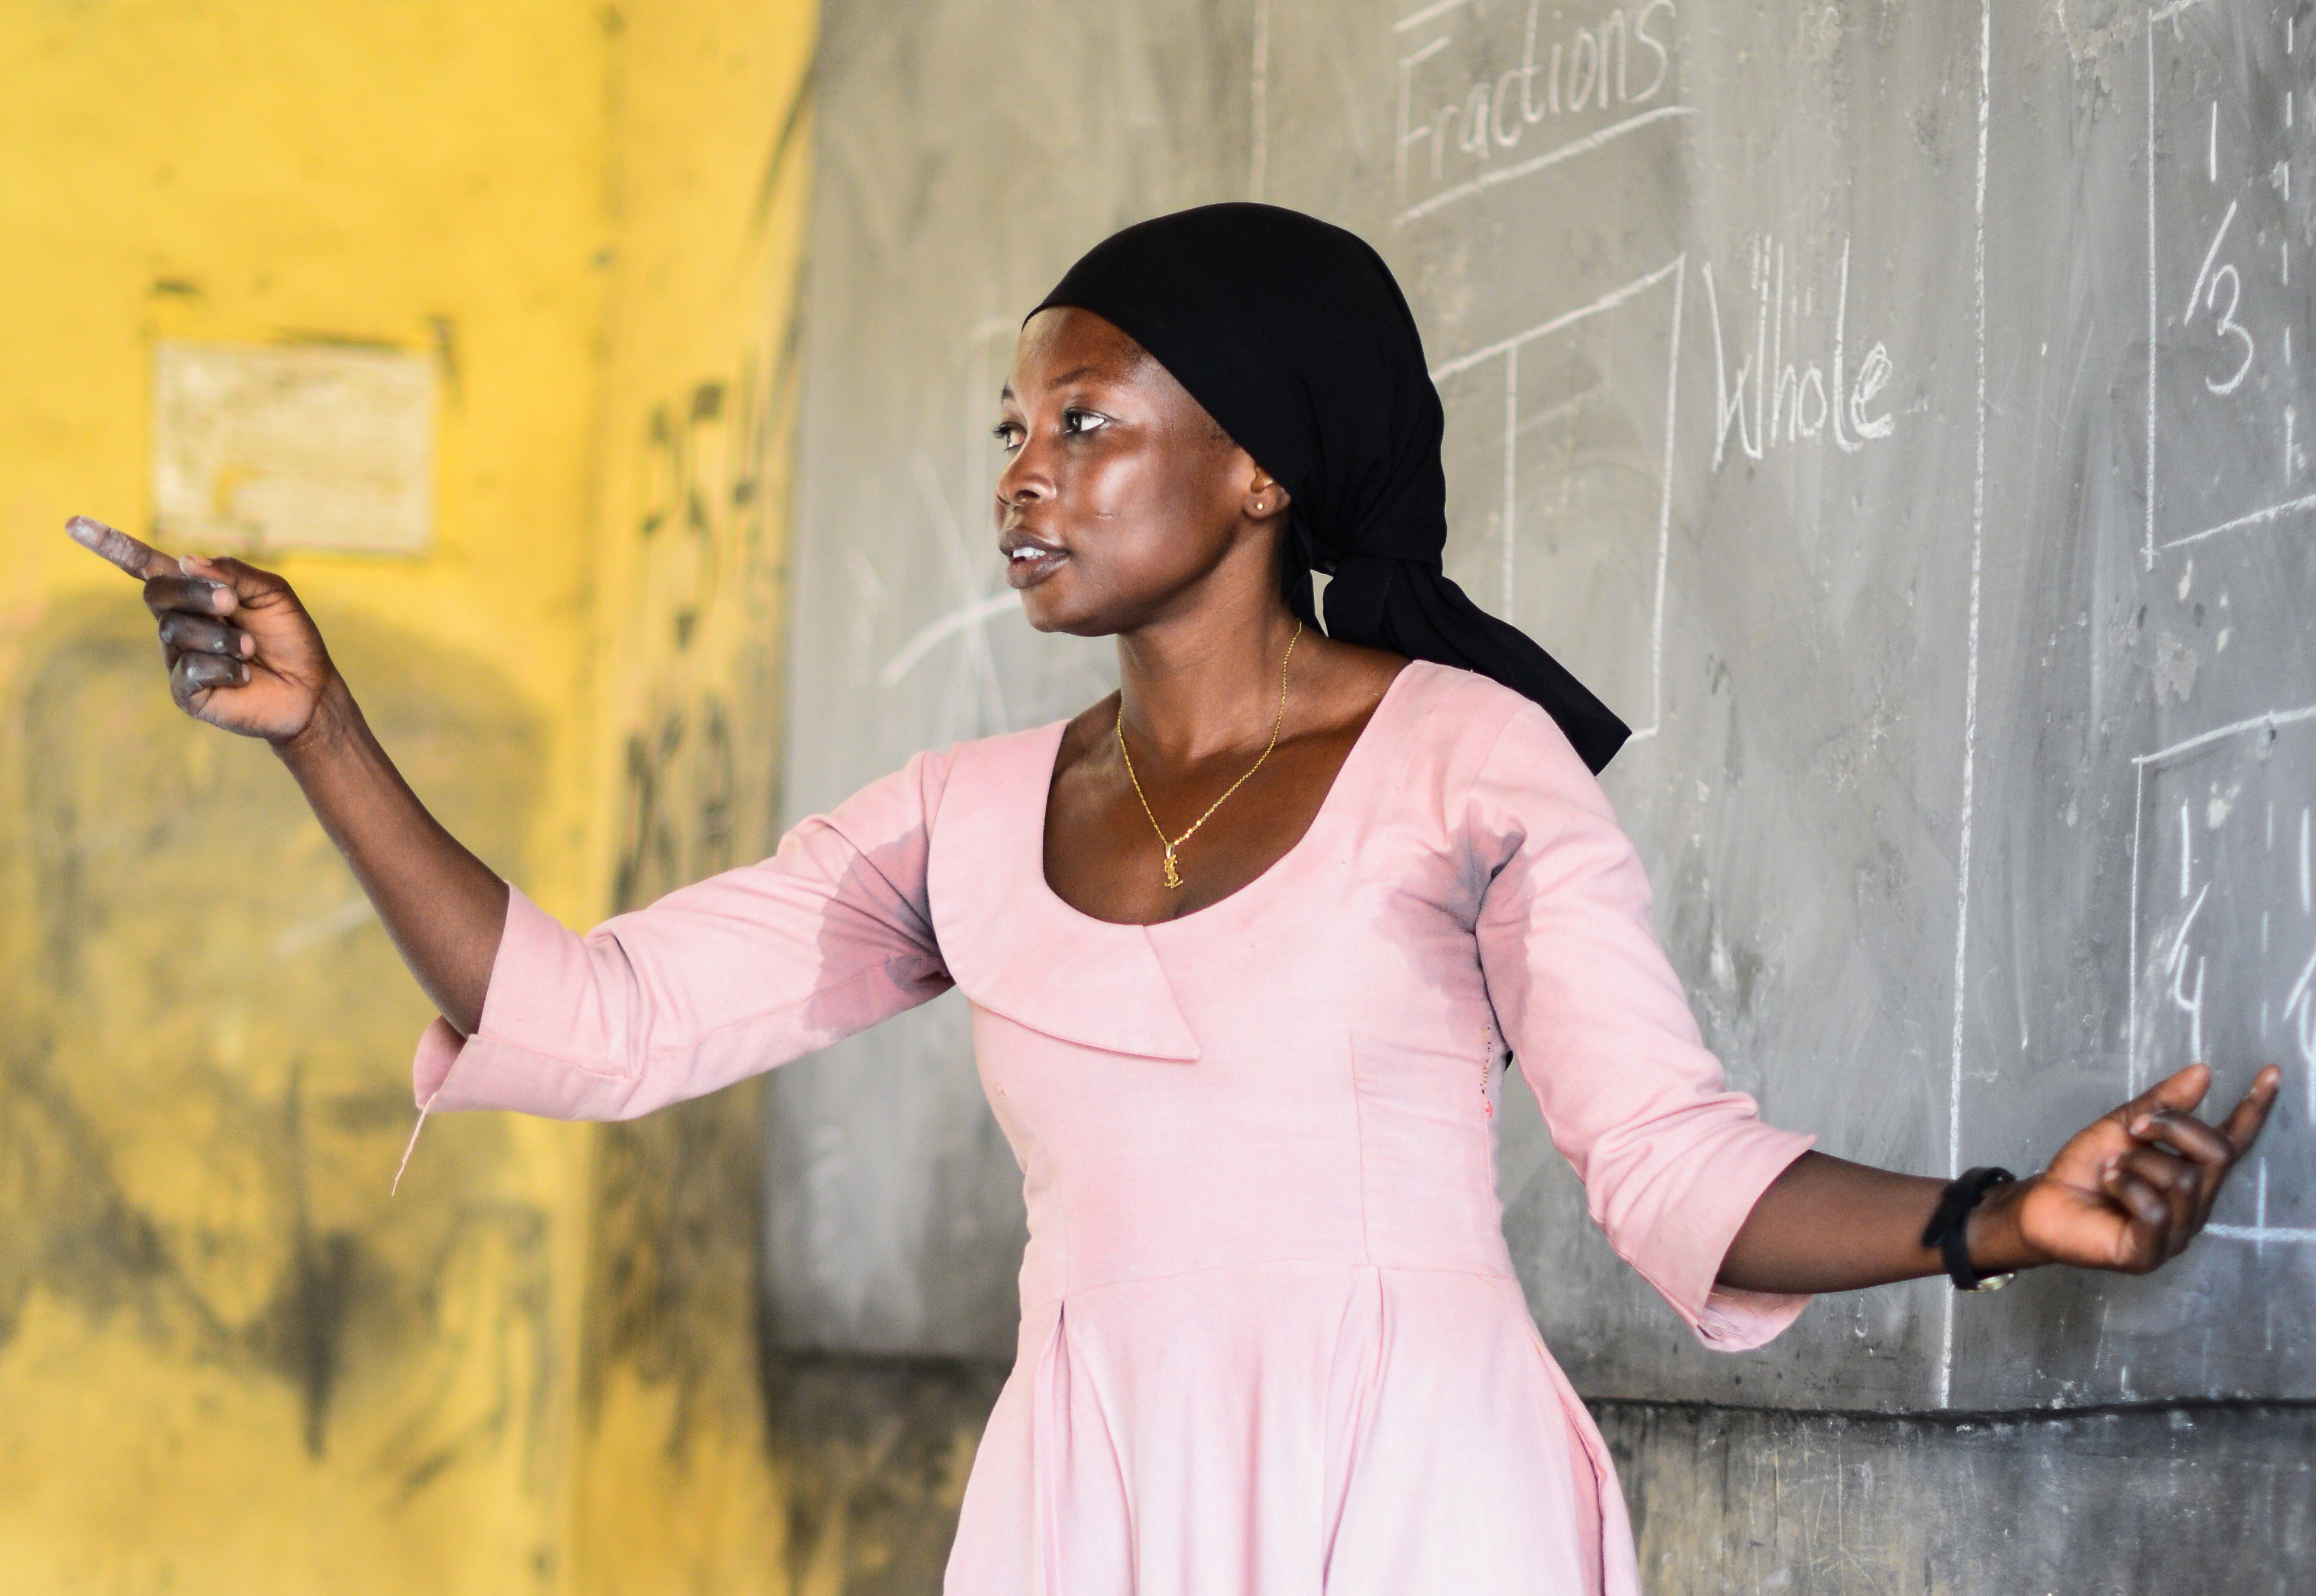 Sulemana Shukura teaching in a school in Ghana.